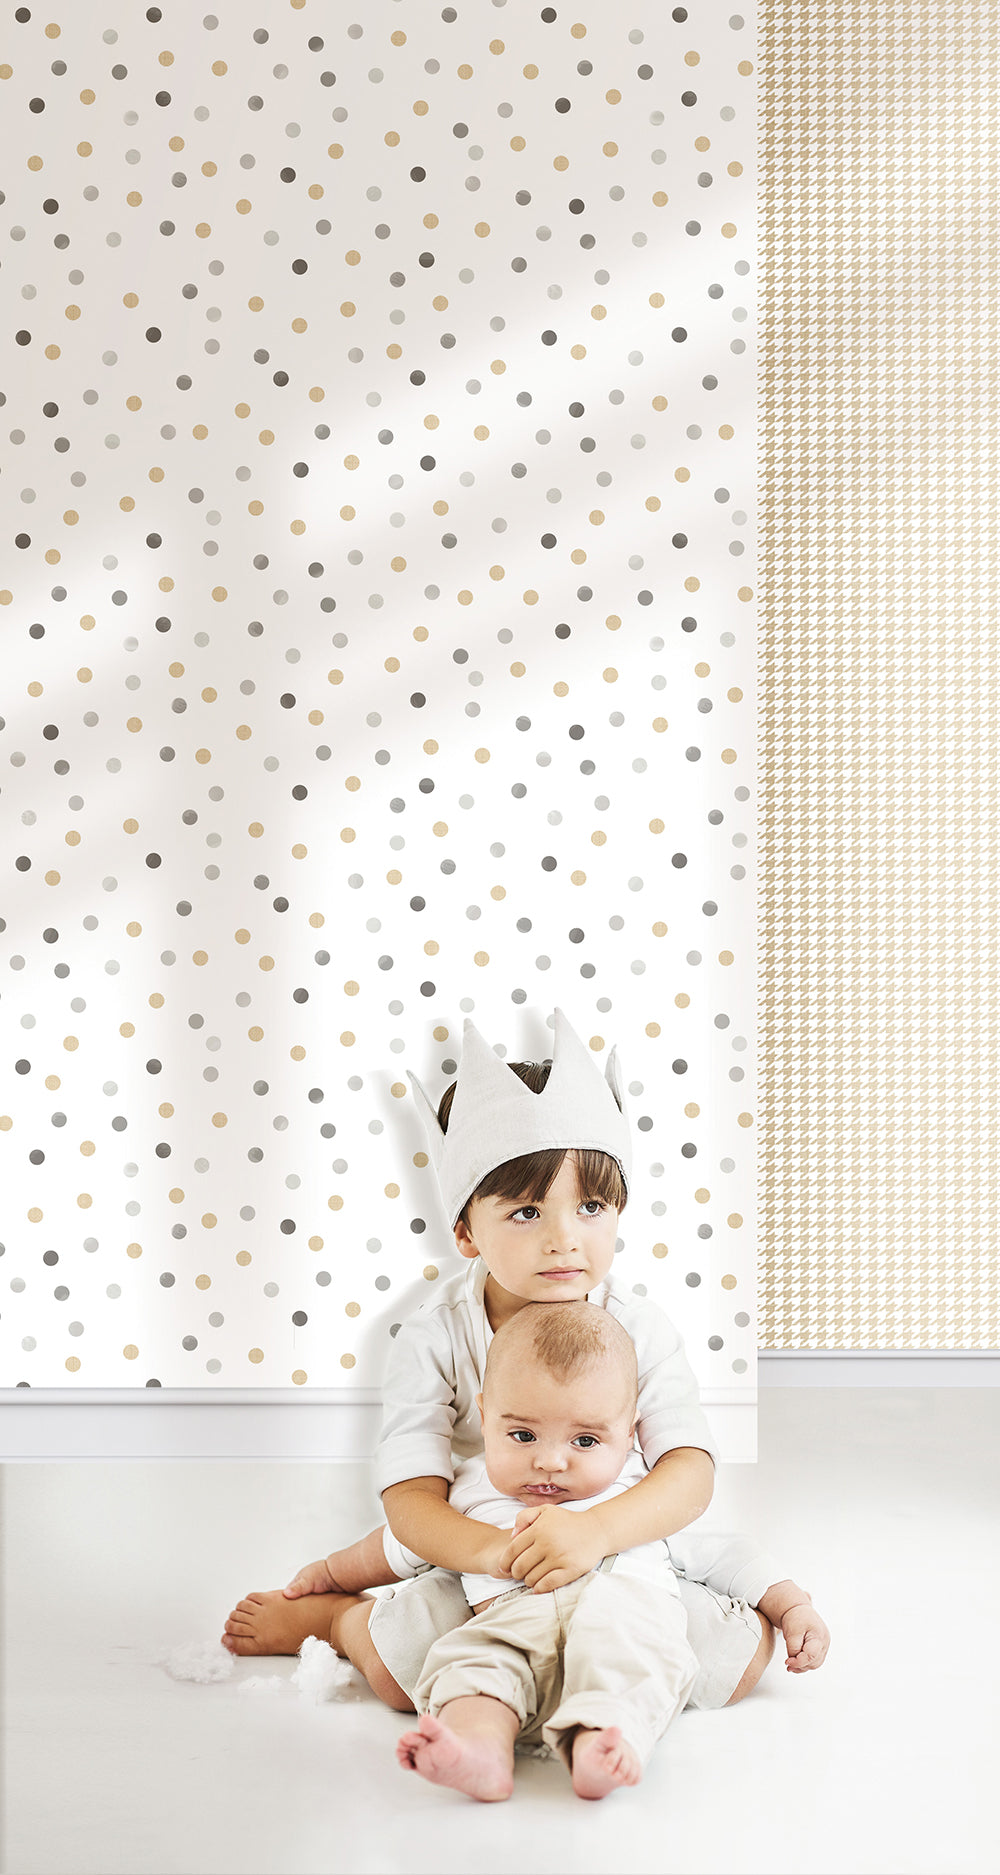 Mondo Baby - Spots kids wallpaper Parato    